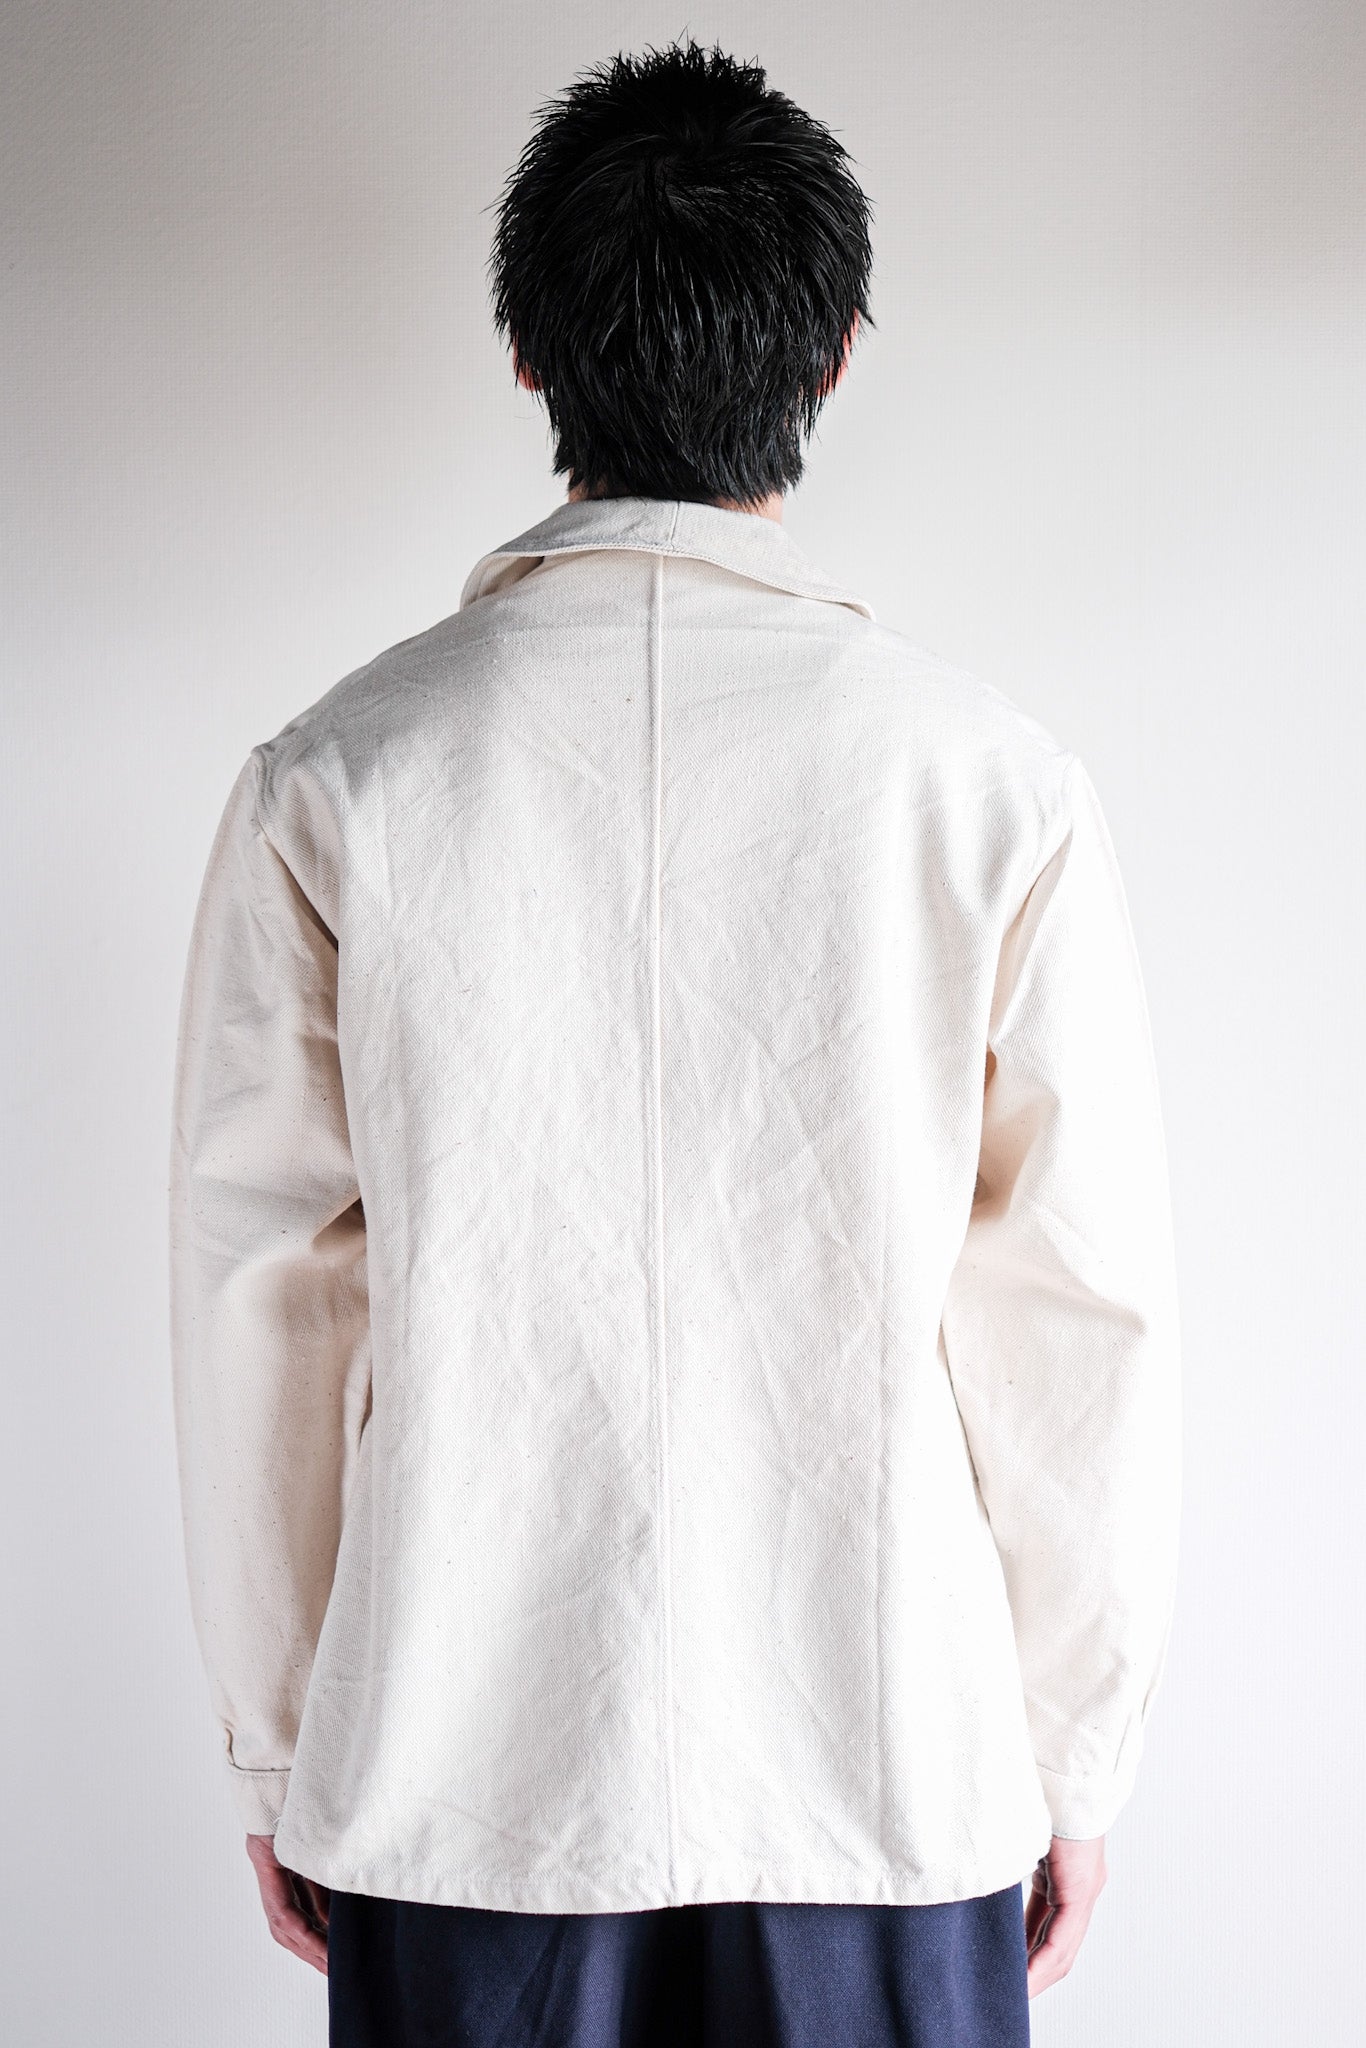 40's】French Vintage White Cotton Twill Work Jacket Size.48 